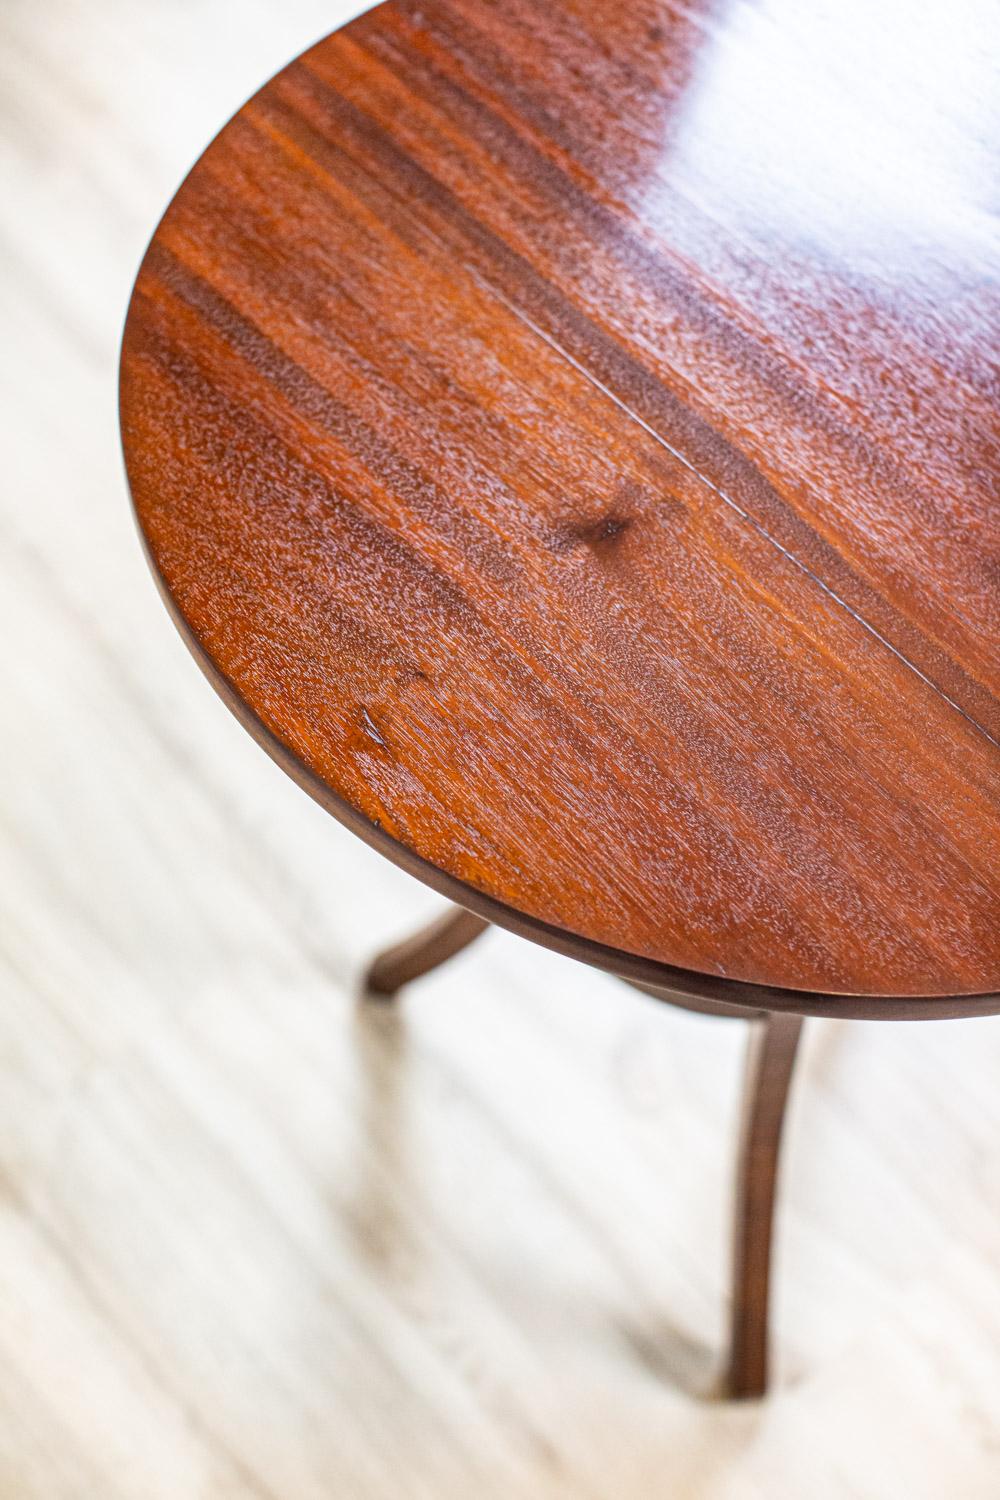 round mahogany end table